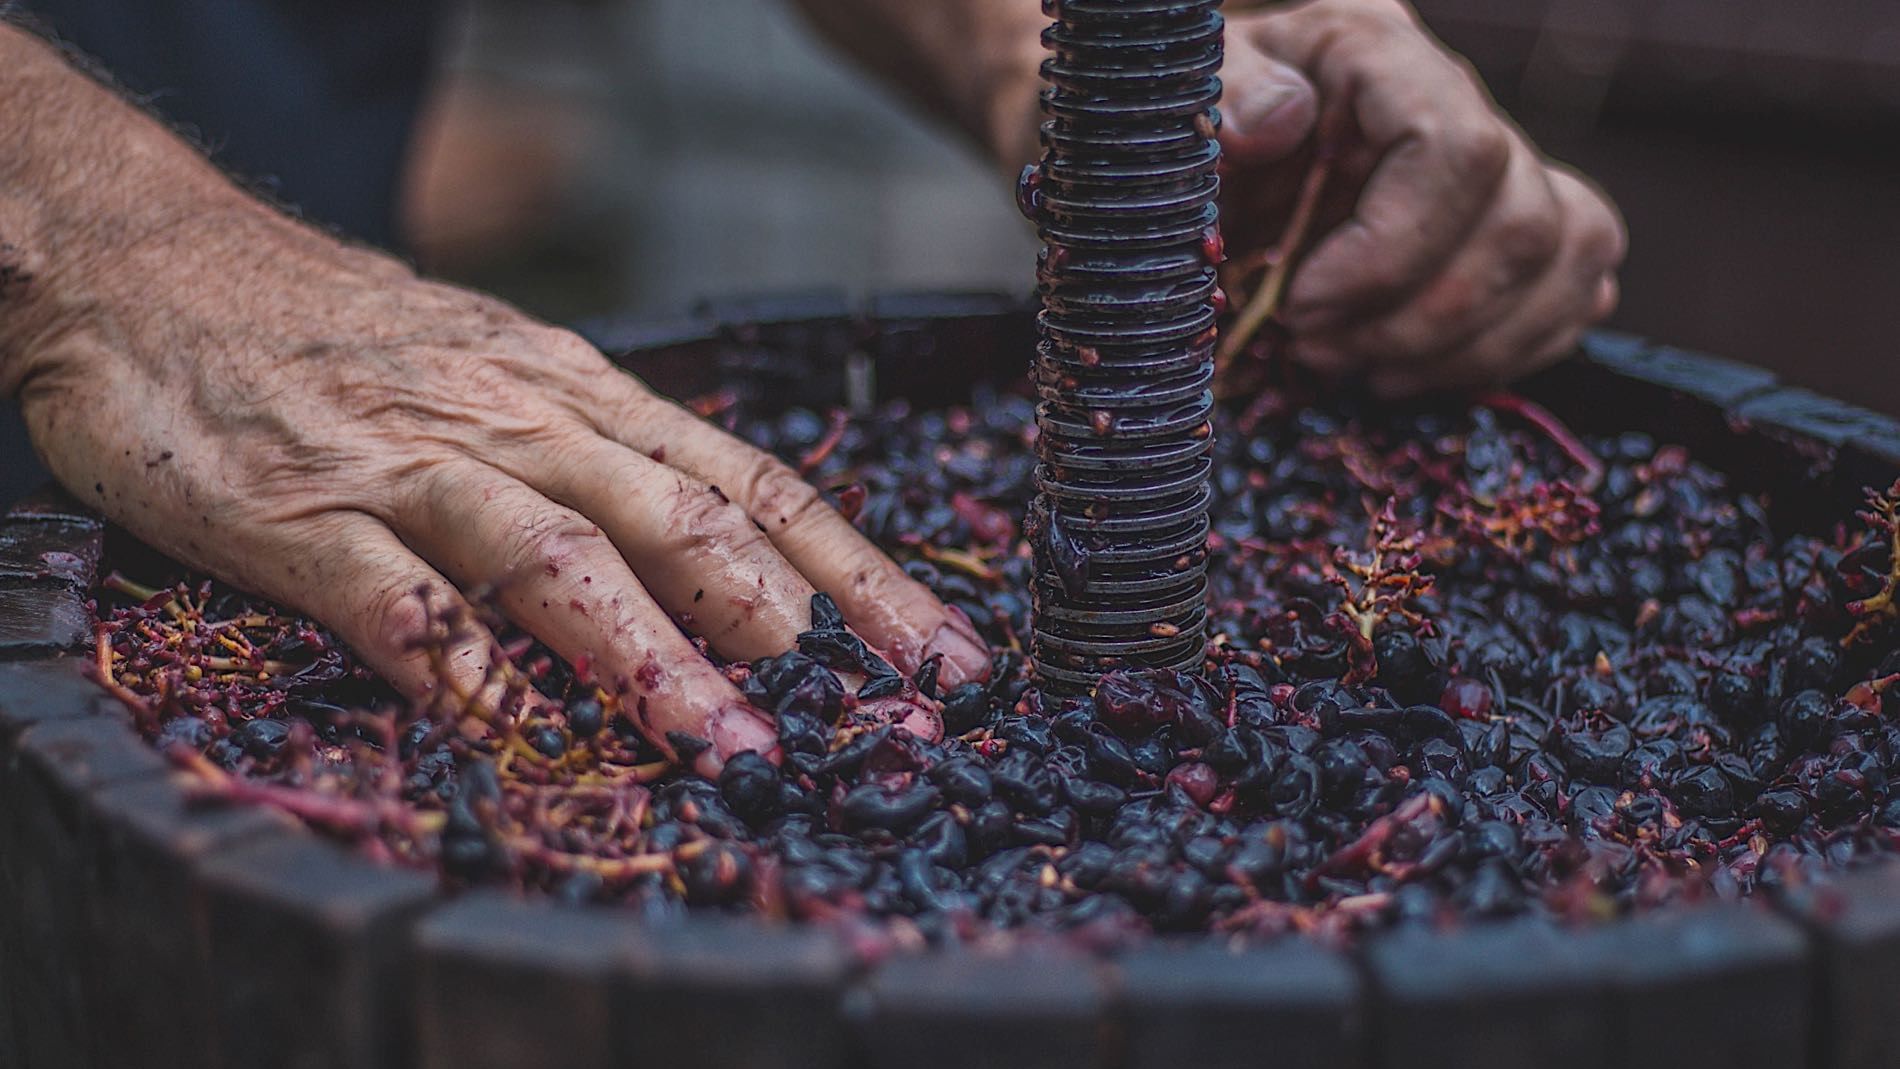 A man crushing berries to make wine near The Originals Hotels